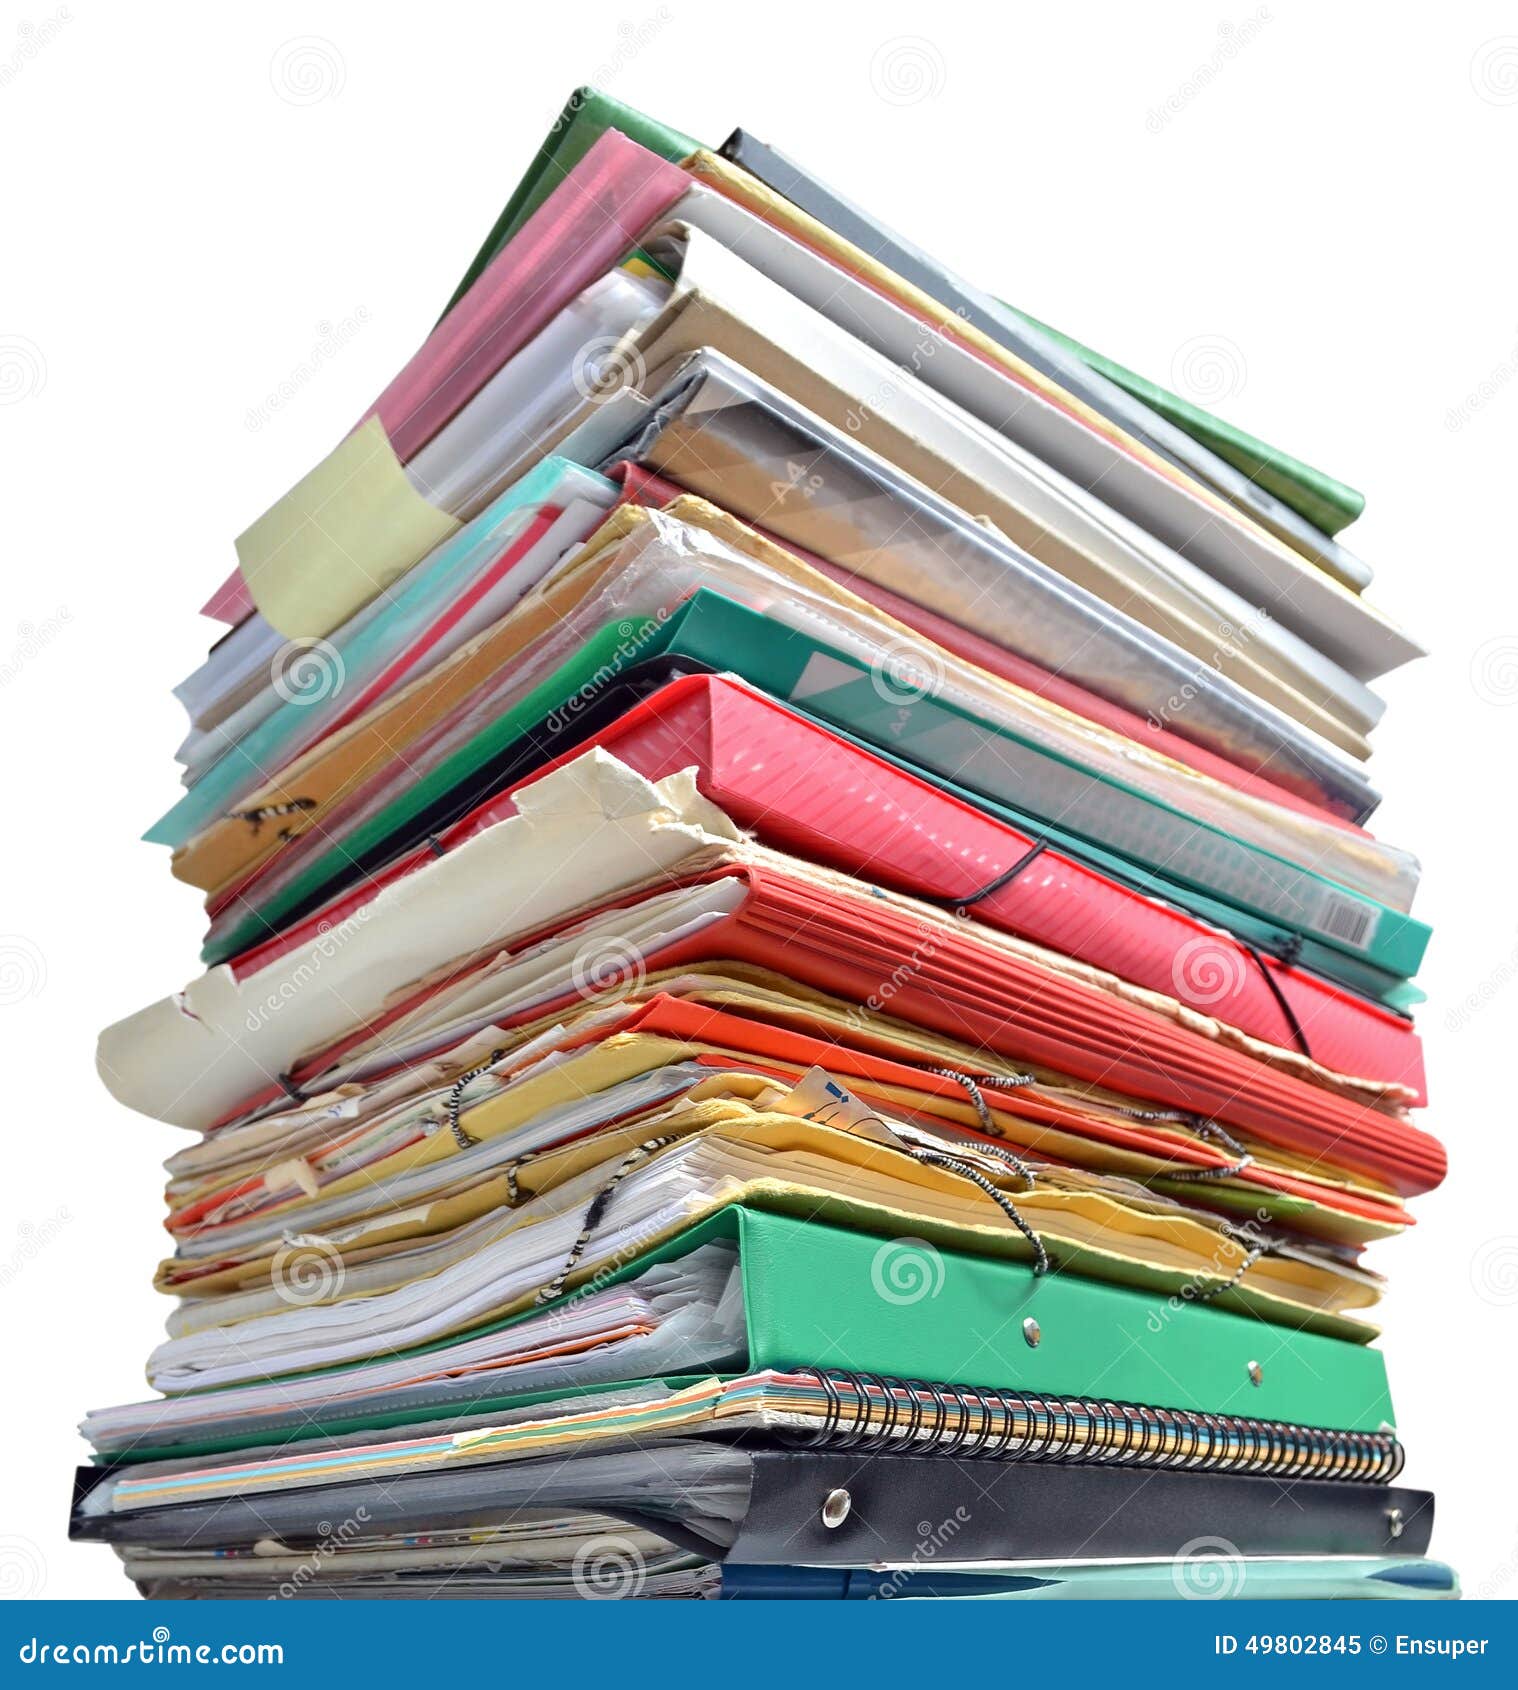 stack of folders